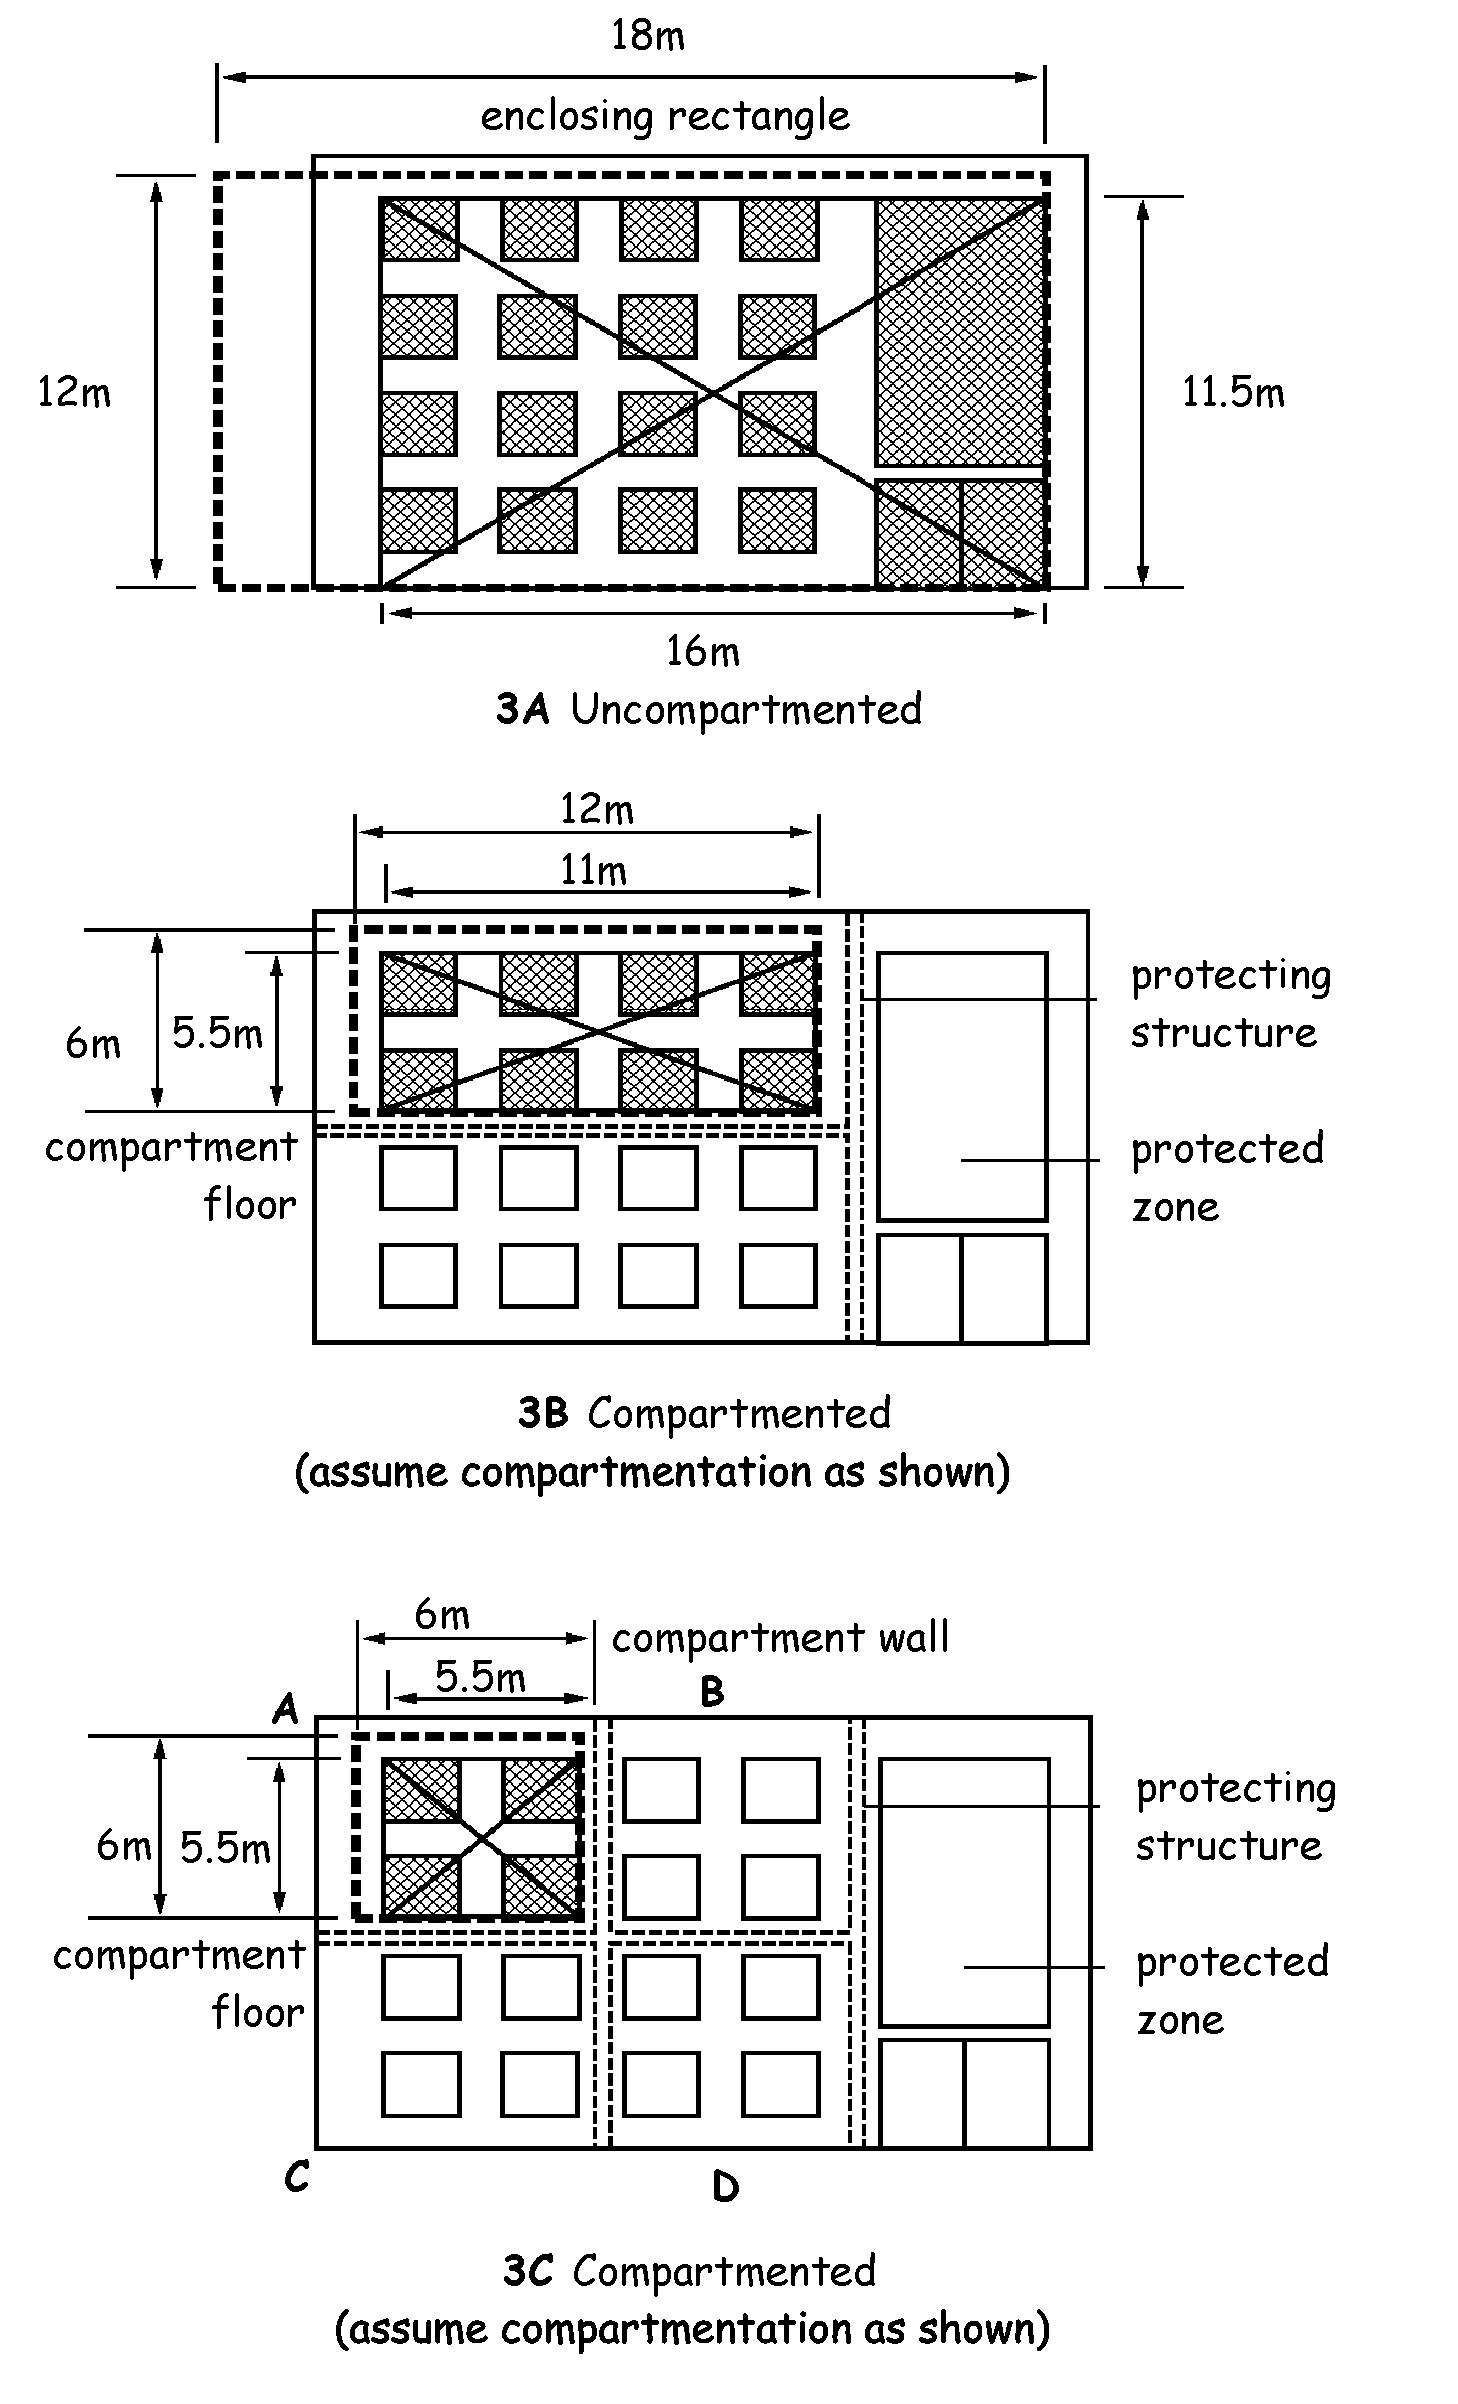 Diagram 3A Uncompartmented; Diagram 3B Compartmented; Diagram 3C Compartmented